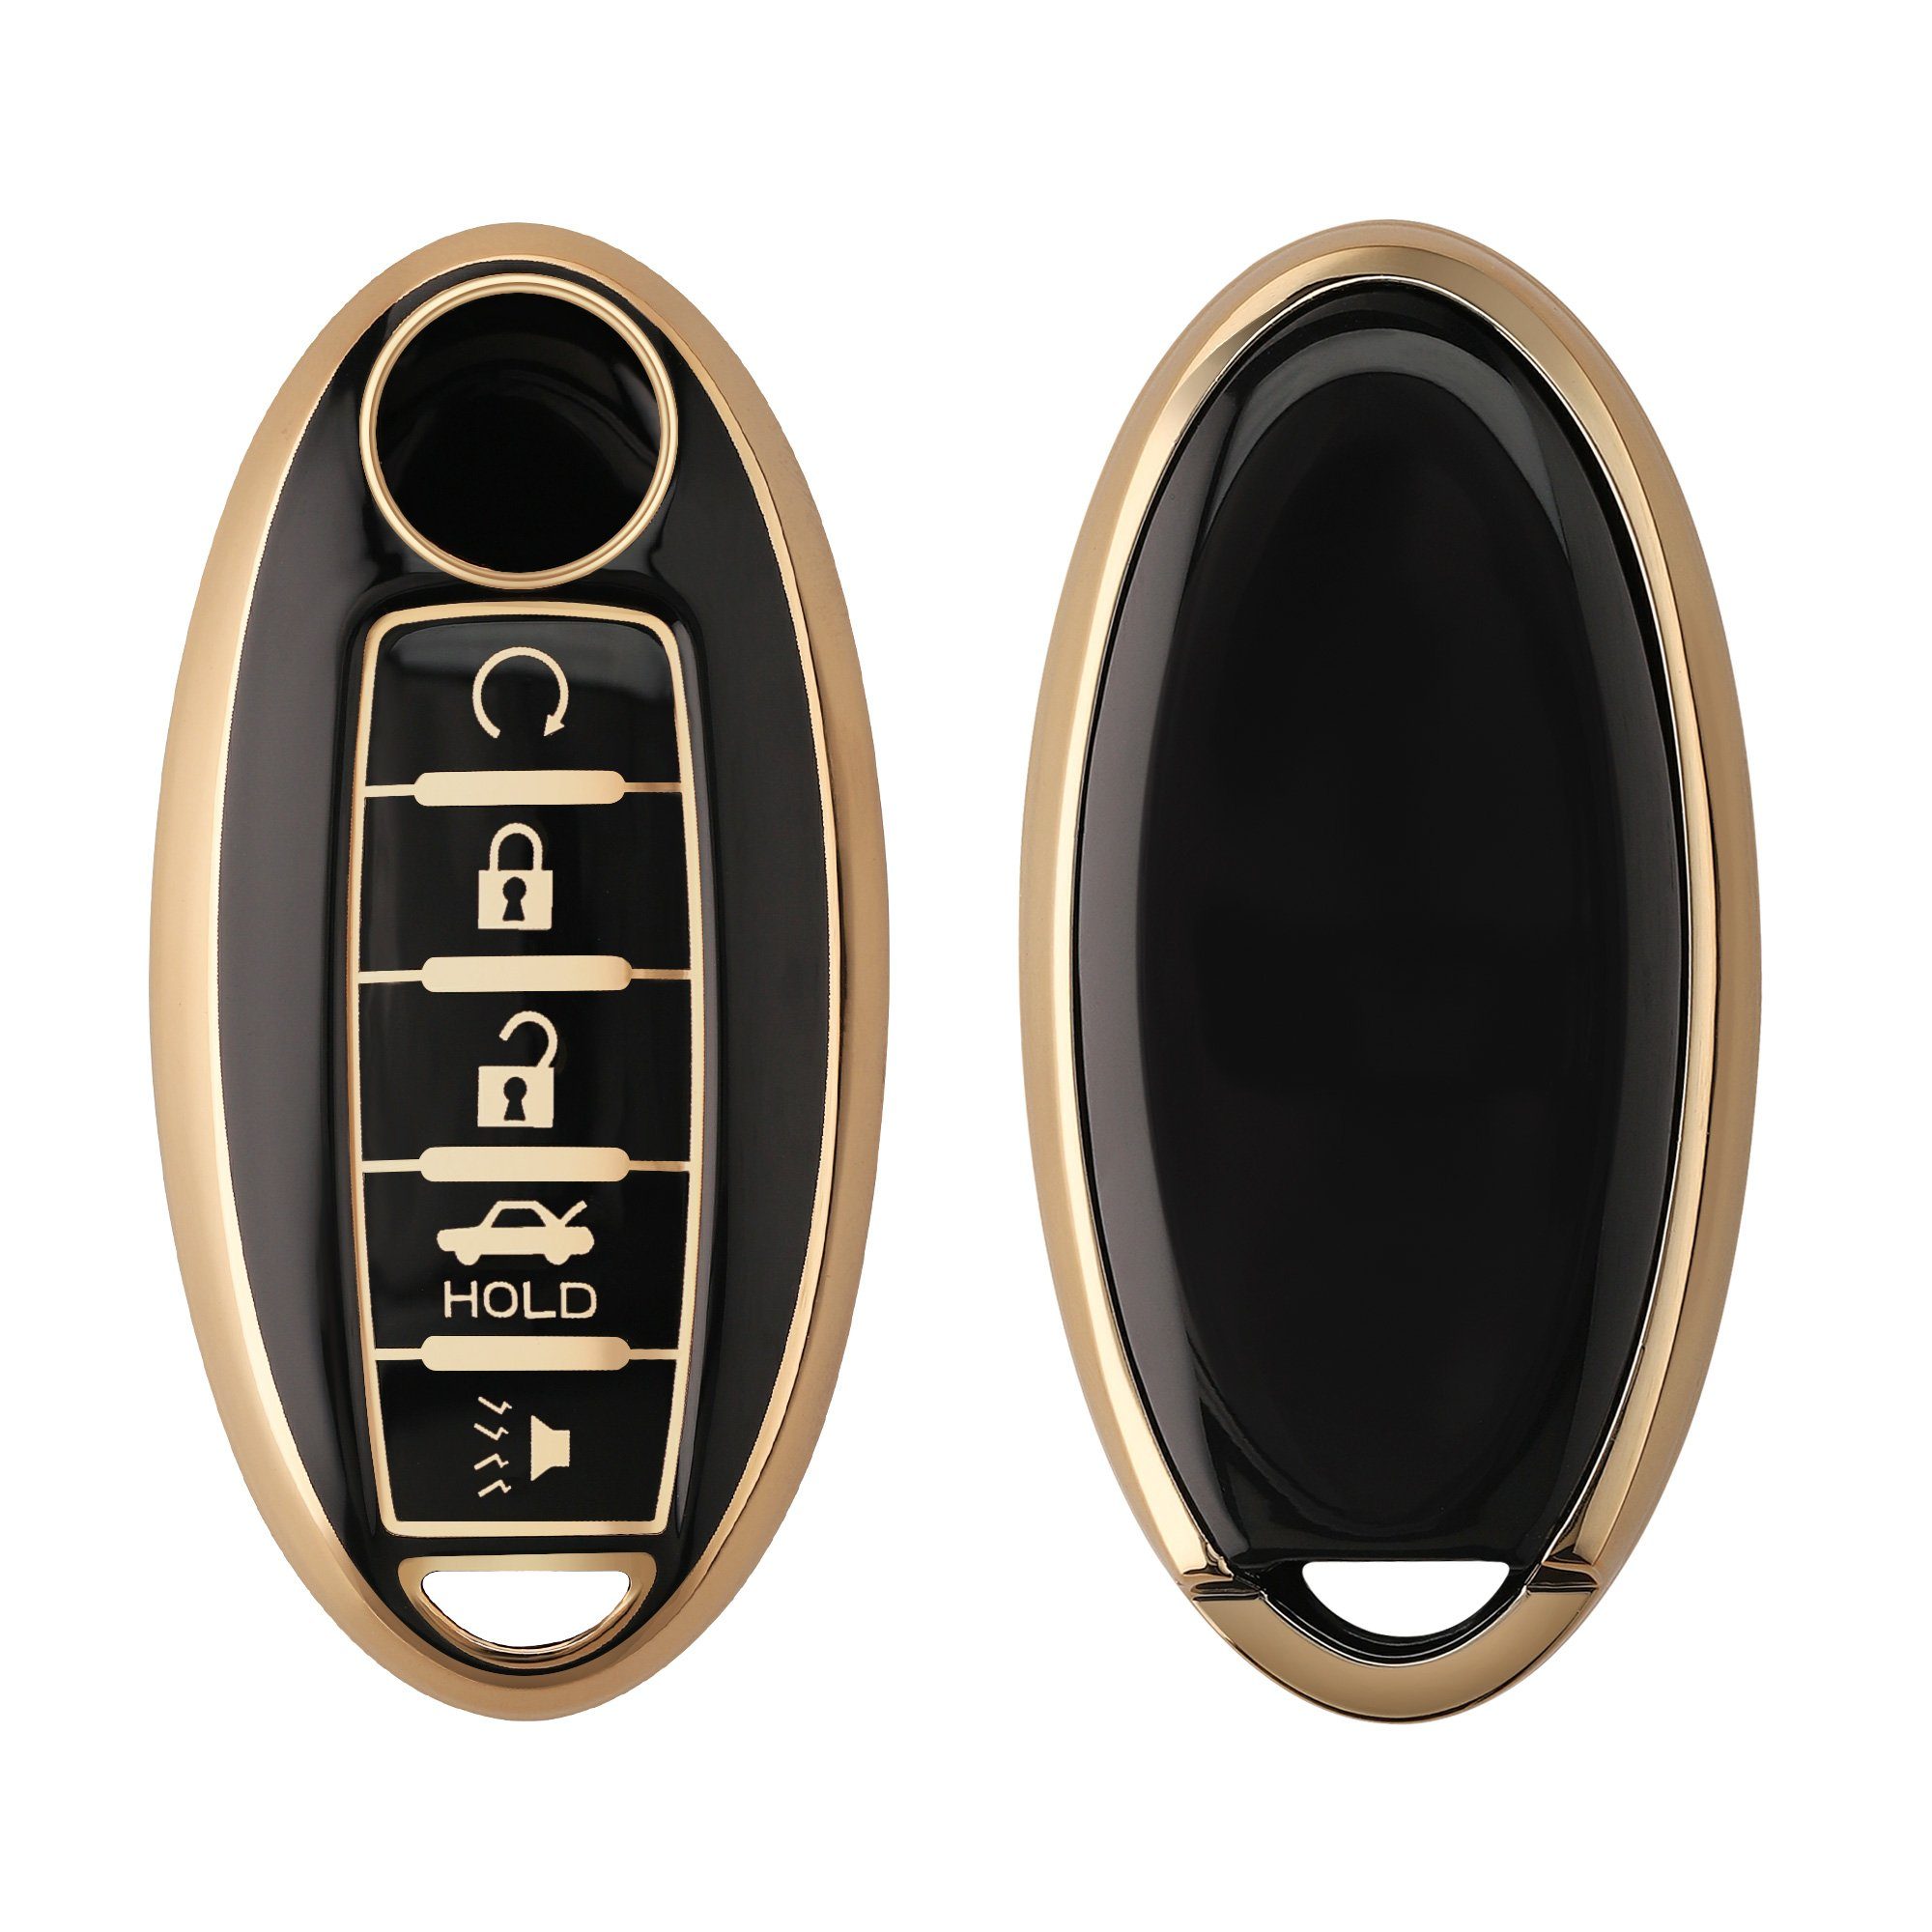 Hülle Cover Autoschlüssel Silikon für, kwmobile Schlüsselhülle Schlüsseltasche